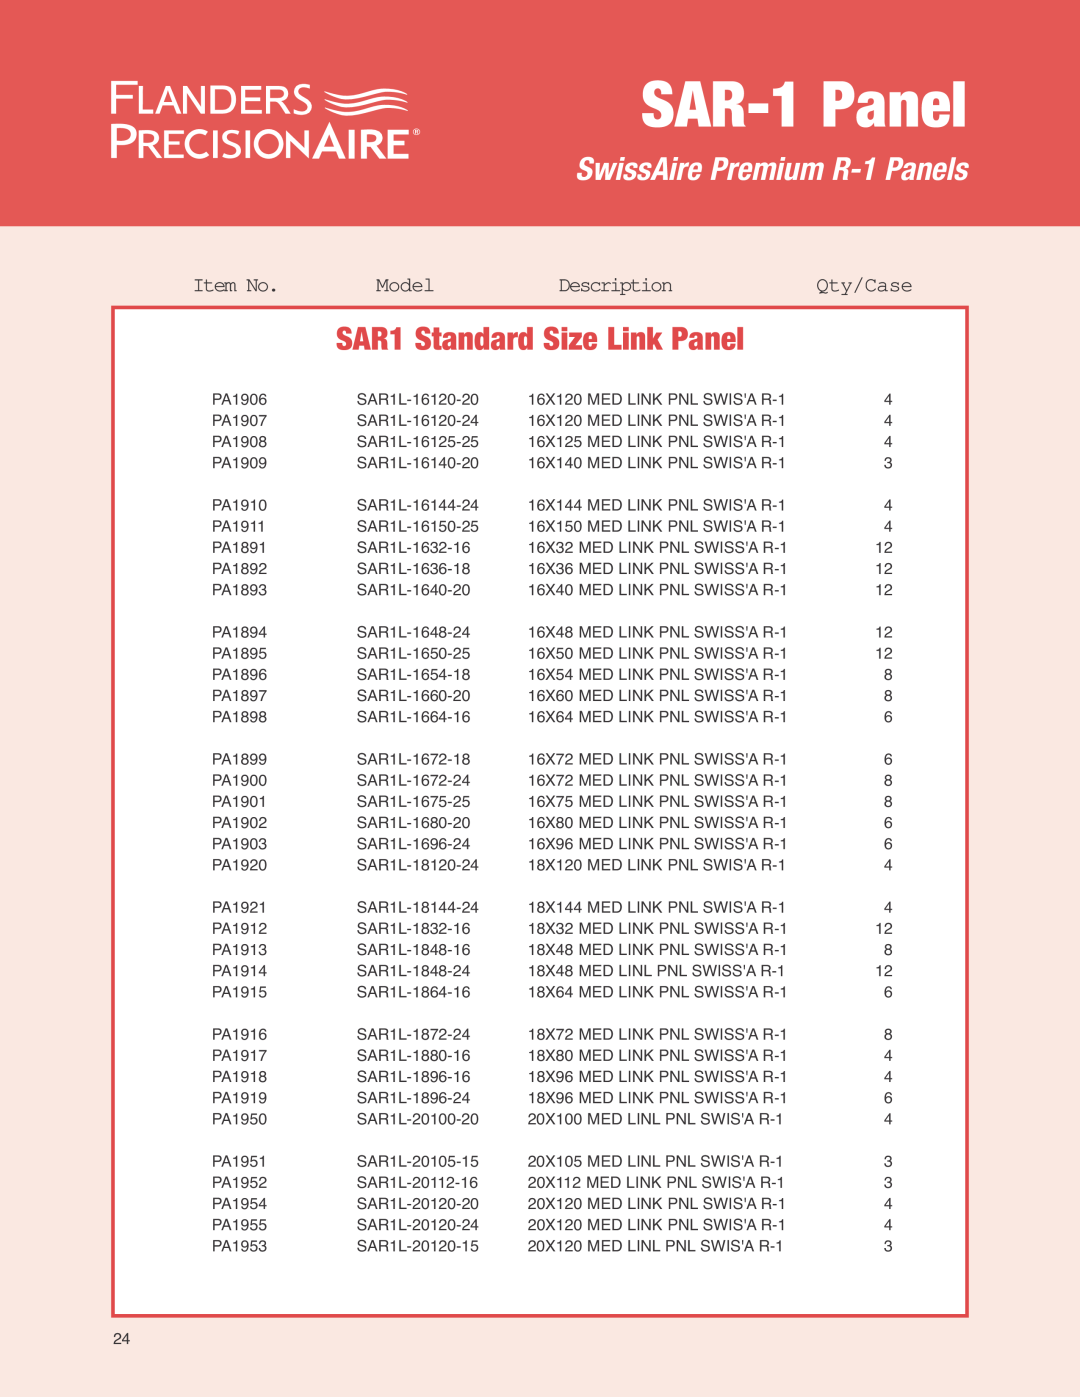 Precisionaire SAR-1 Media manual Item No, Model, Description, Qty/Case, SAR-1Panel, SwissAire Premium R-1Panels 